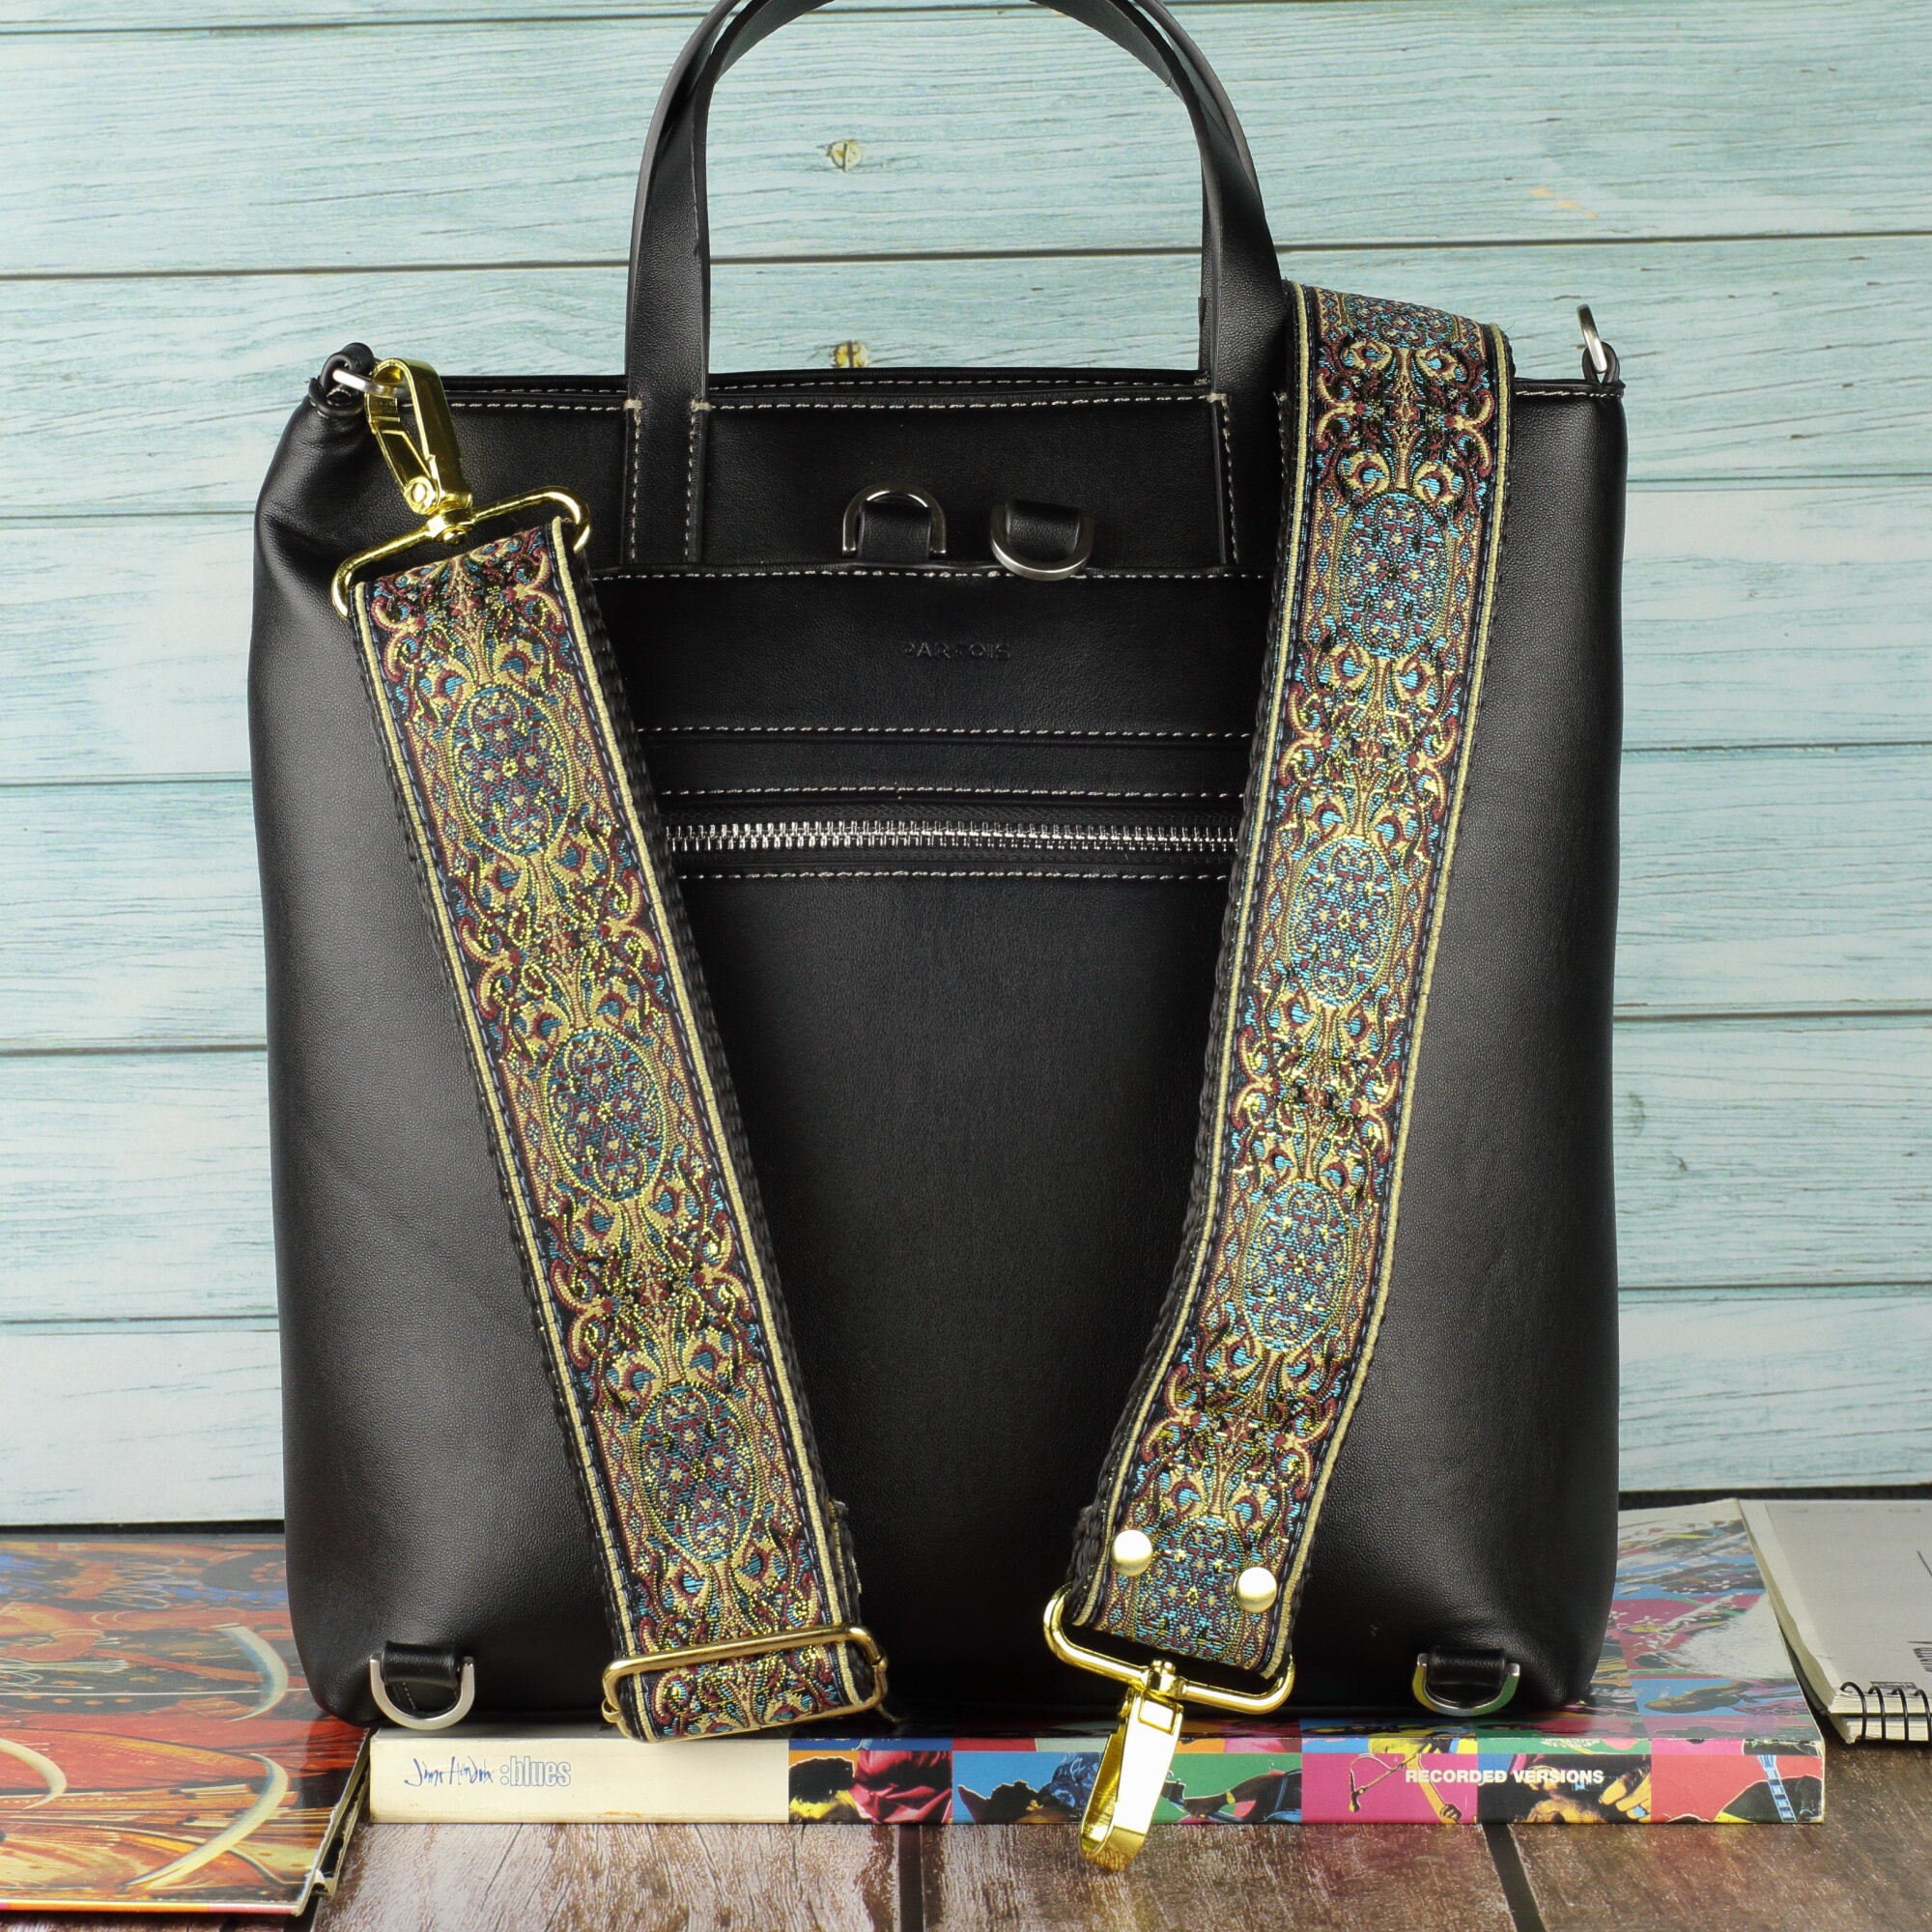 Art Nouveau Strap for Handbags / Purses - Colorful Floral Design -  Adjustable, Shoulder to Cross Body Strap - Guitar-inspired Strap